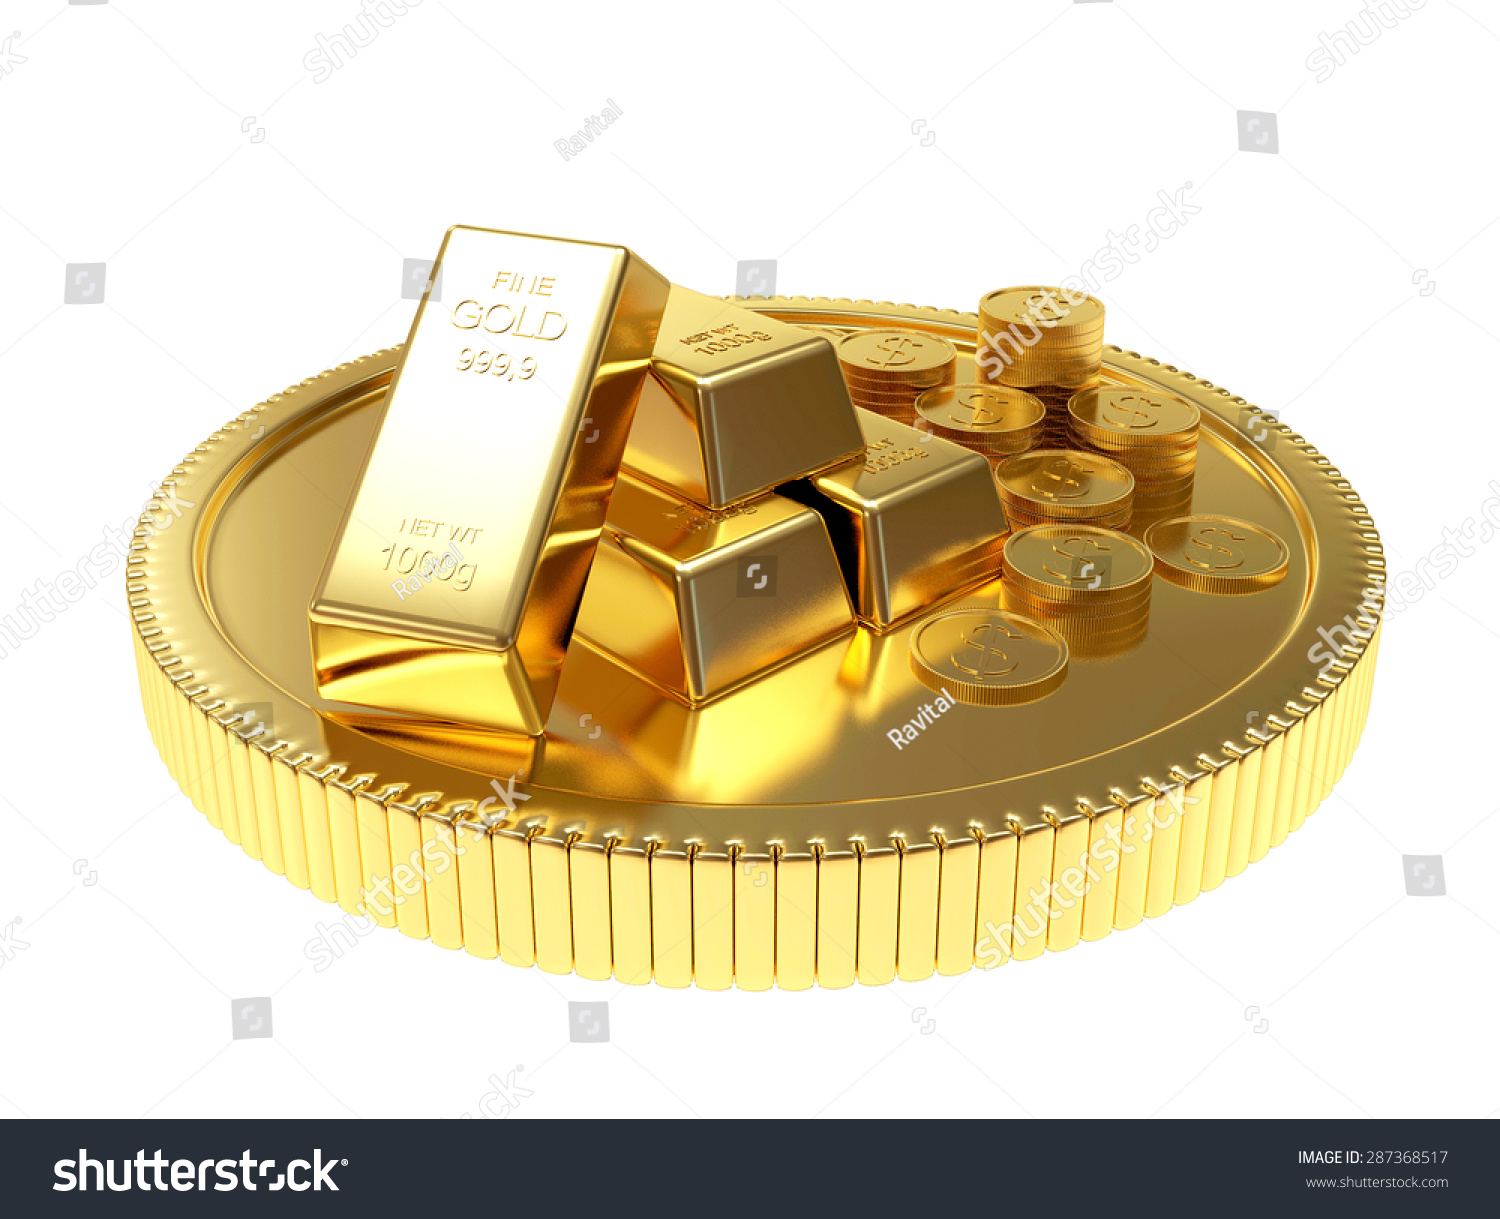 Торт с золотыми слитками и монетами